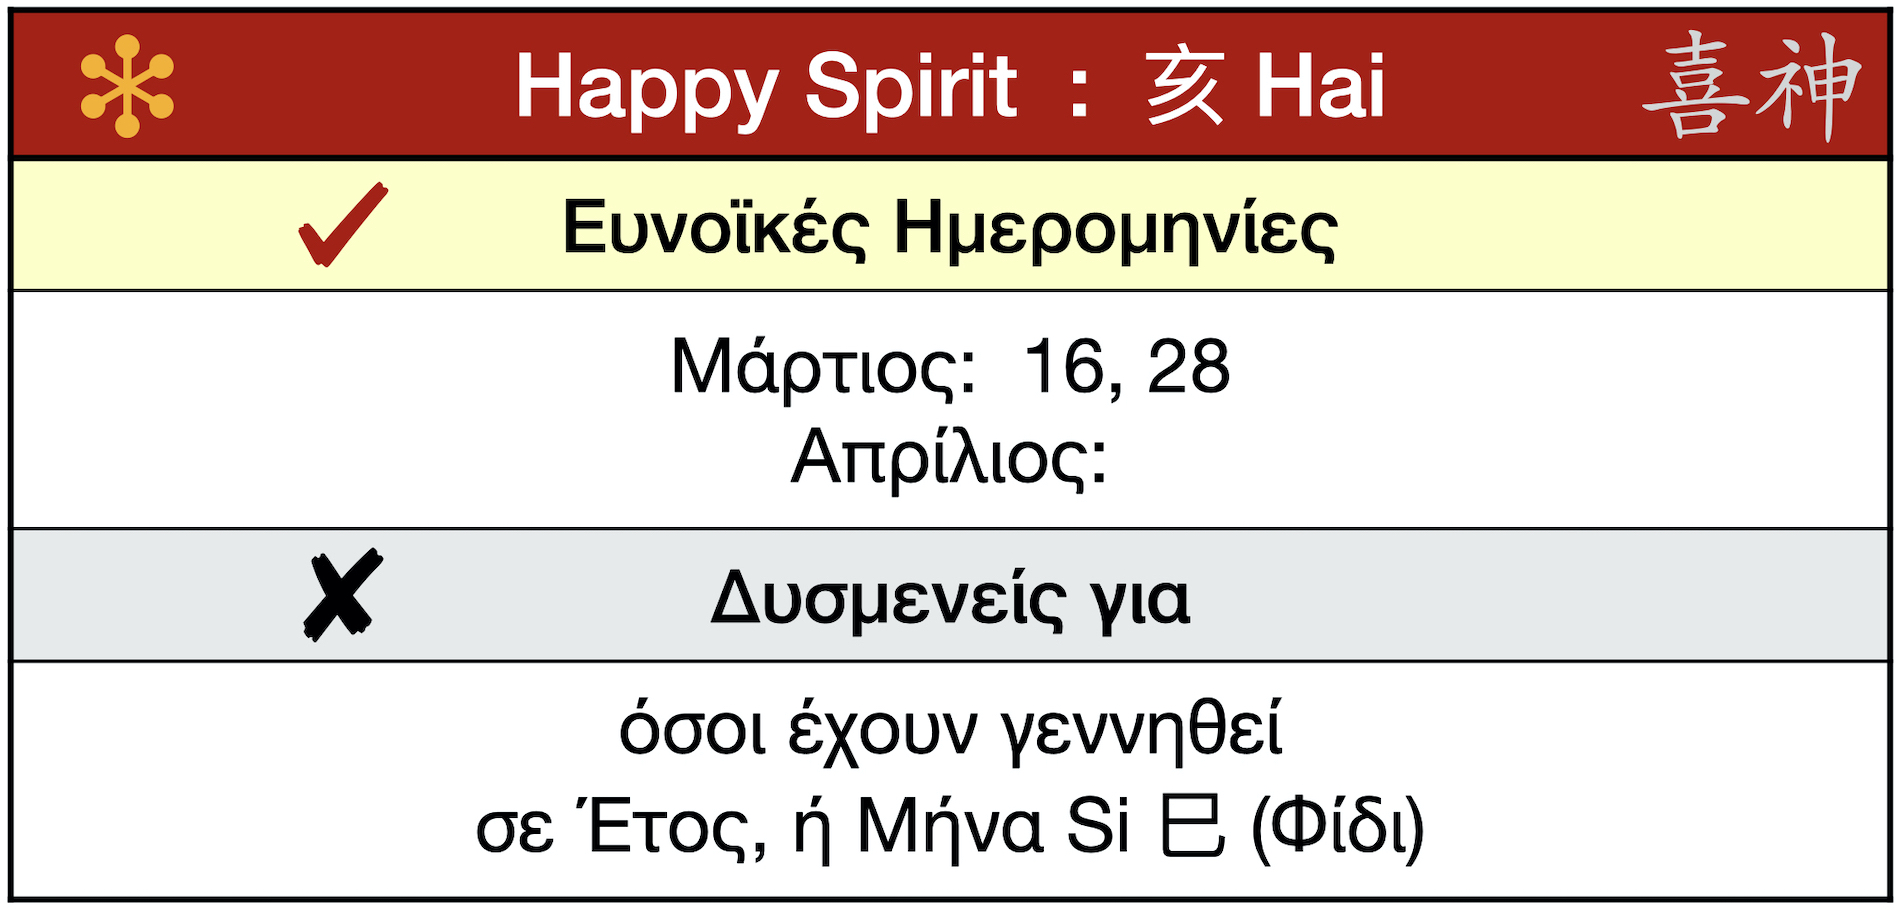 Heavenly Star Happy Spirit